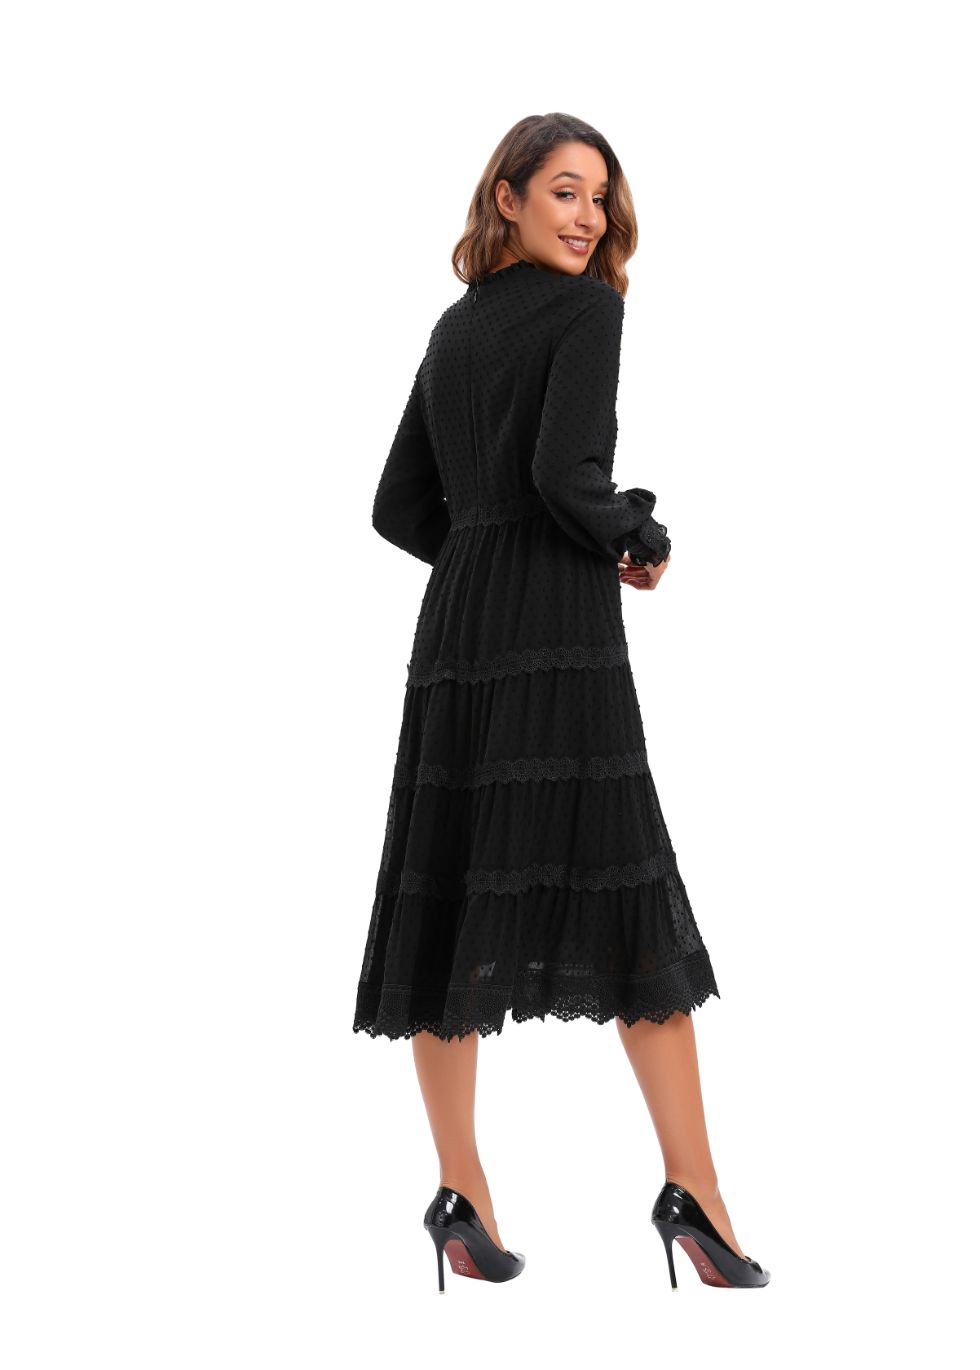 Modest Elegant Long Sleeves  Black Dress W/ Lace trimming 3086 - alamaud